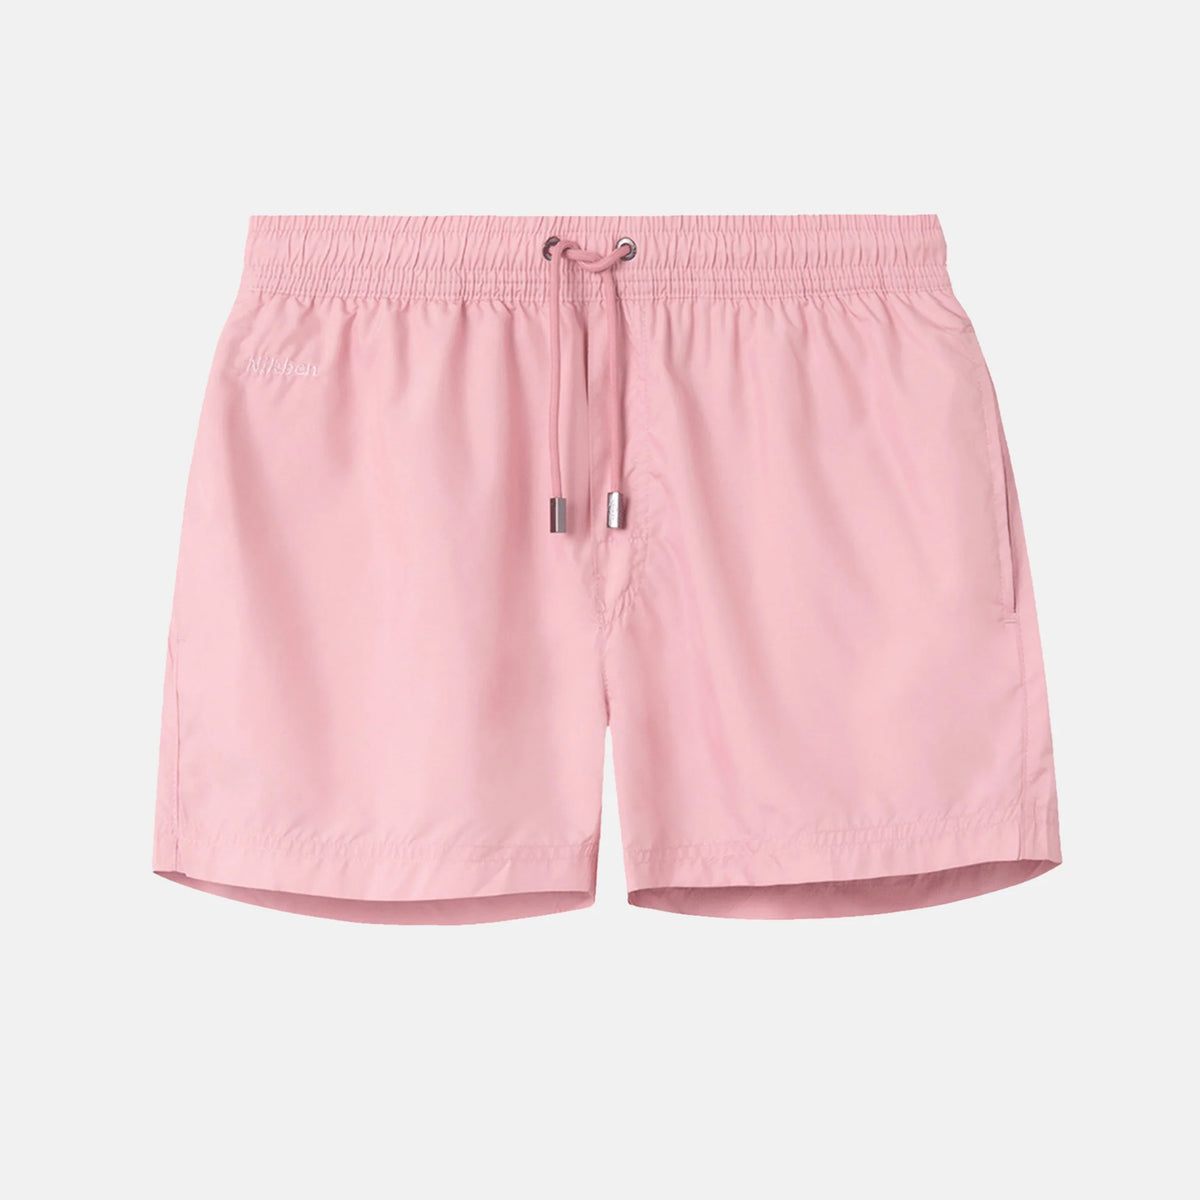 Plain Pink Swim Short. Nikben